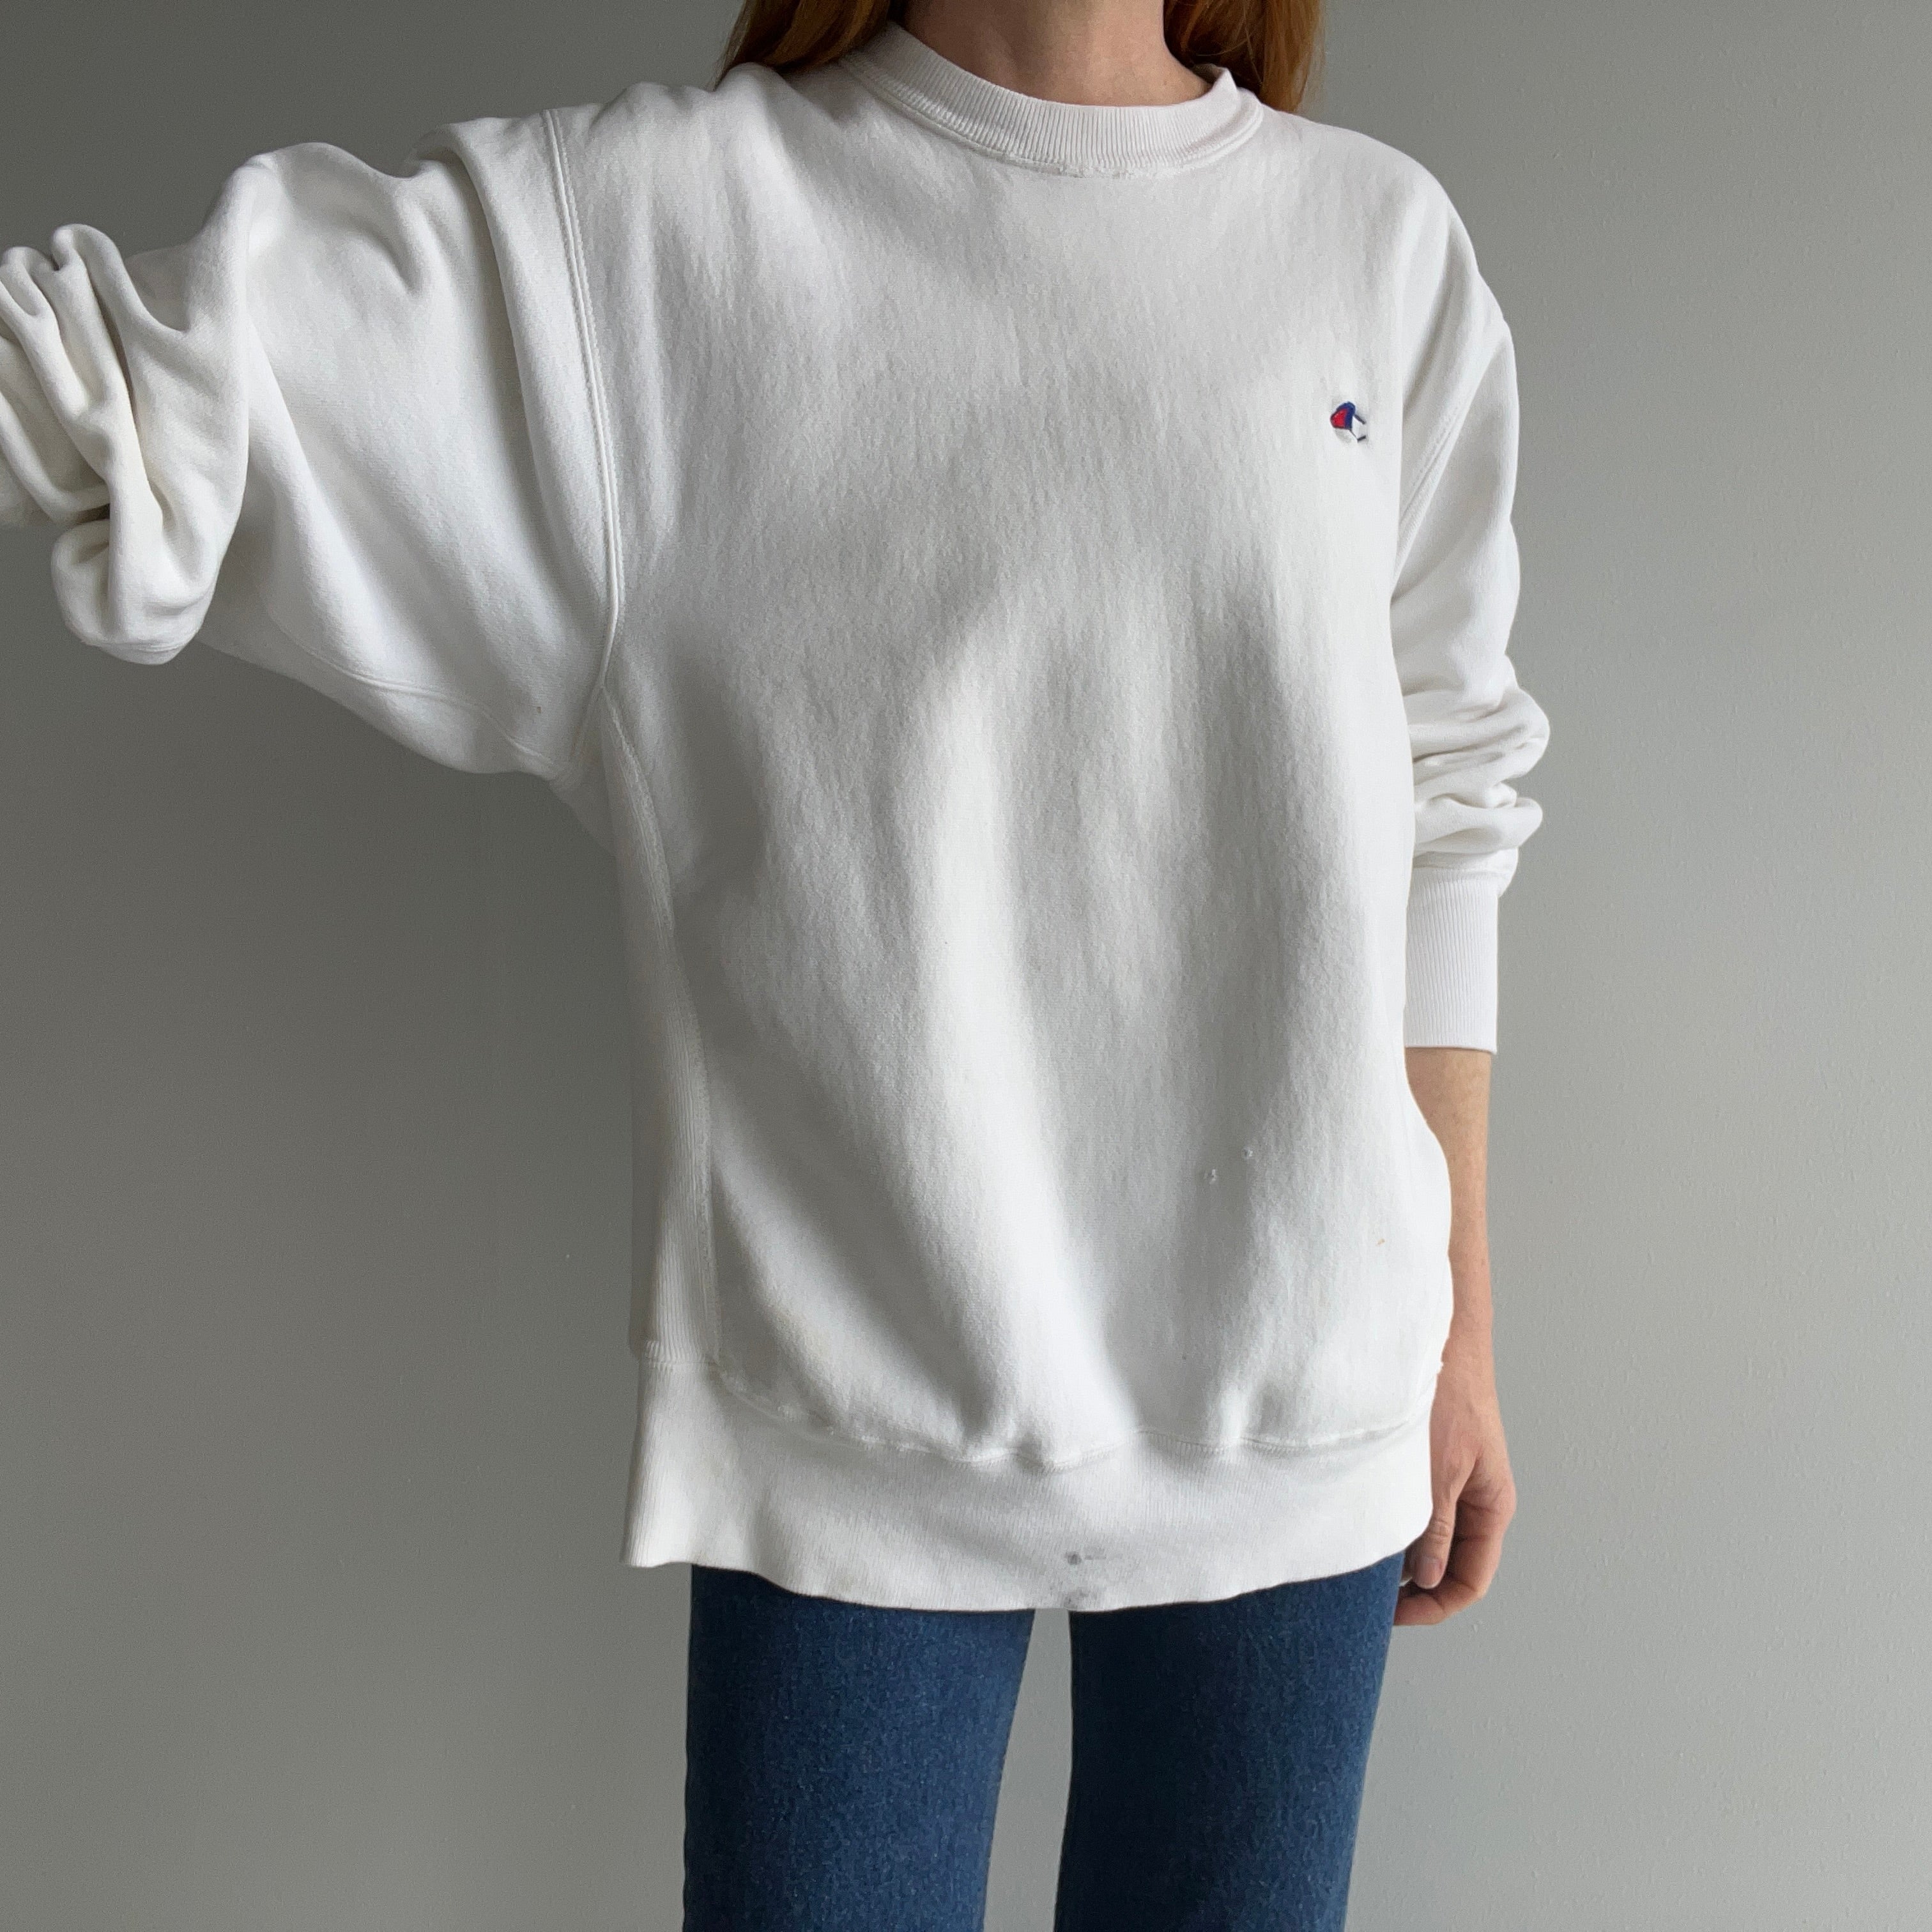 1980s Soft and Worn Heavyweight White Cotton Reverse Weave Sweatshirt